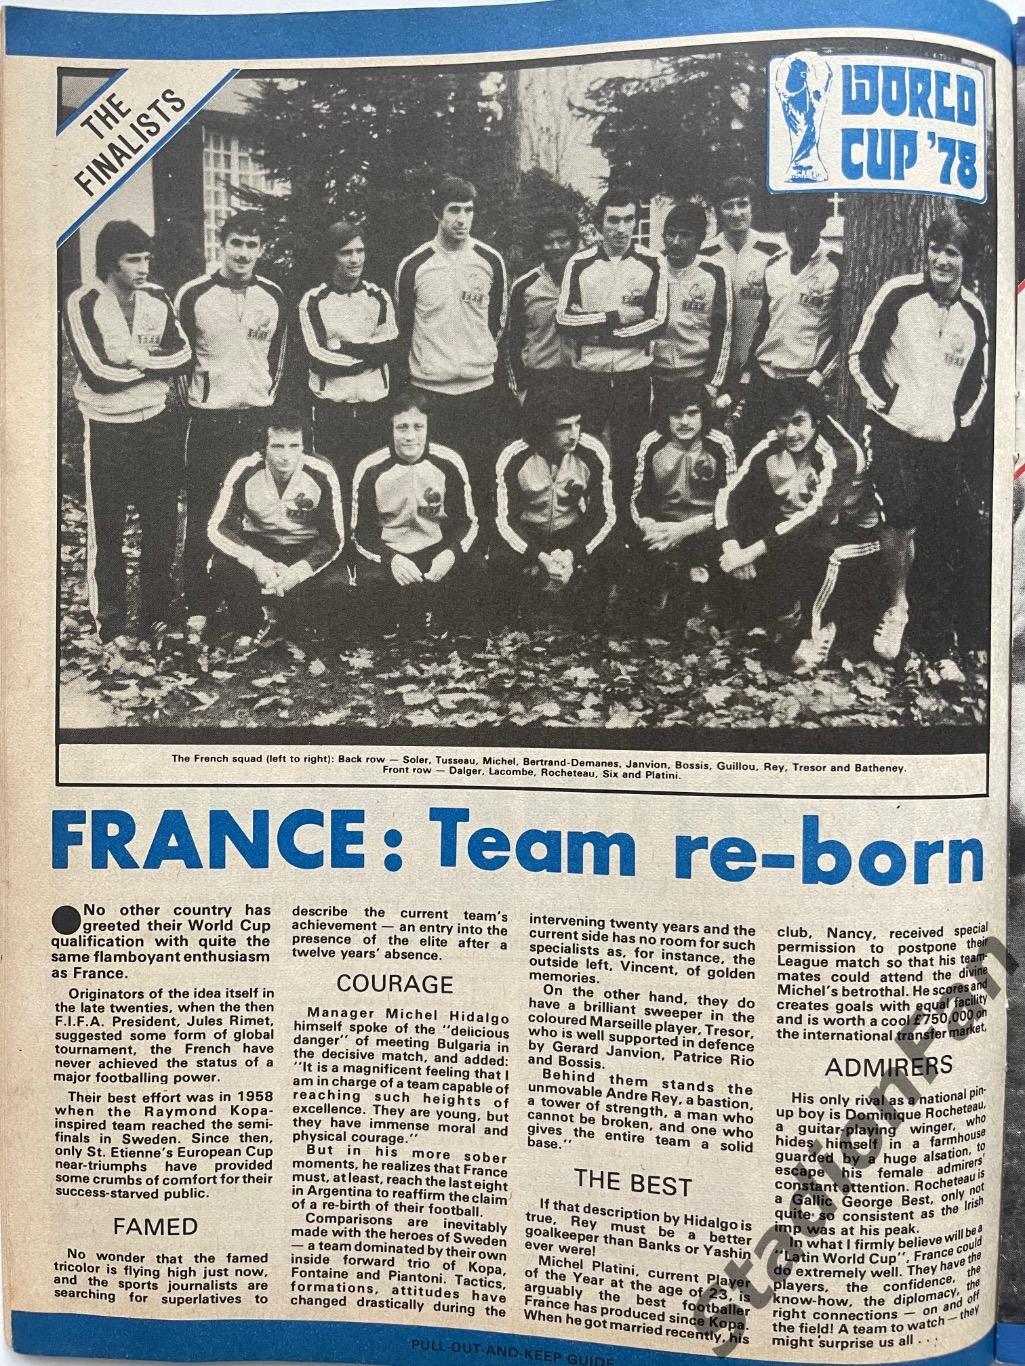 Журнал FOOTBALL - 1978 год, февраль. 2